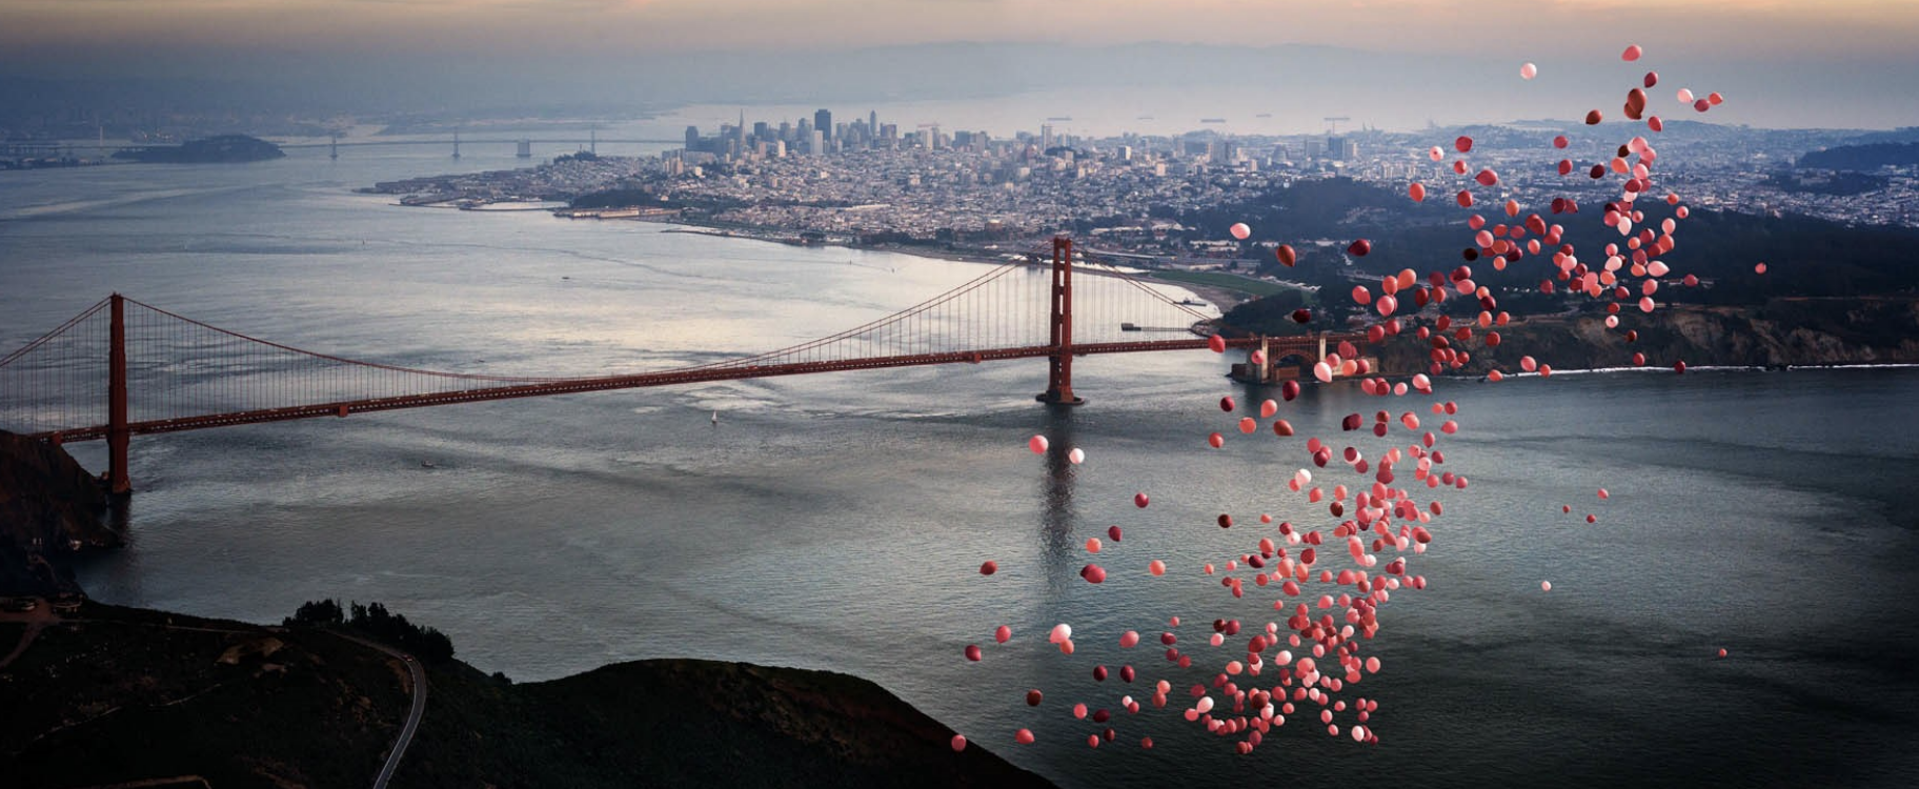 Balloons over San Francisco by David Drebin